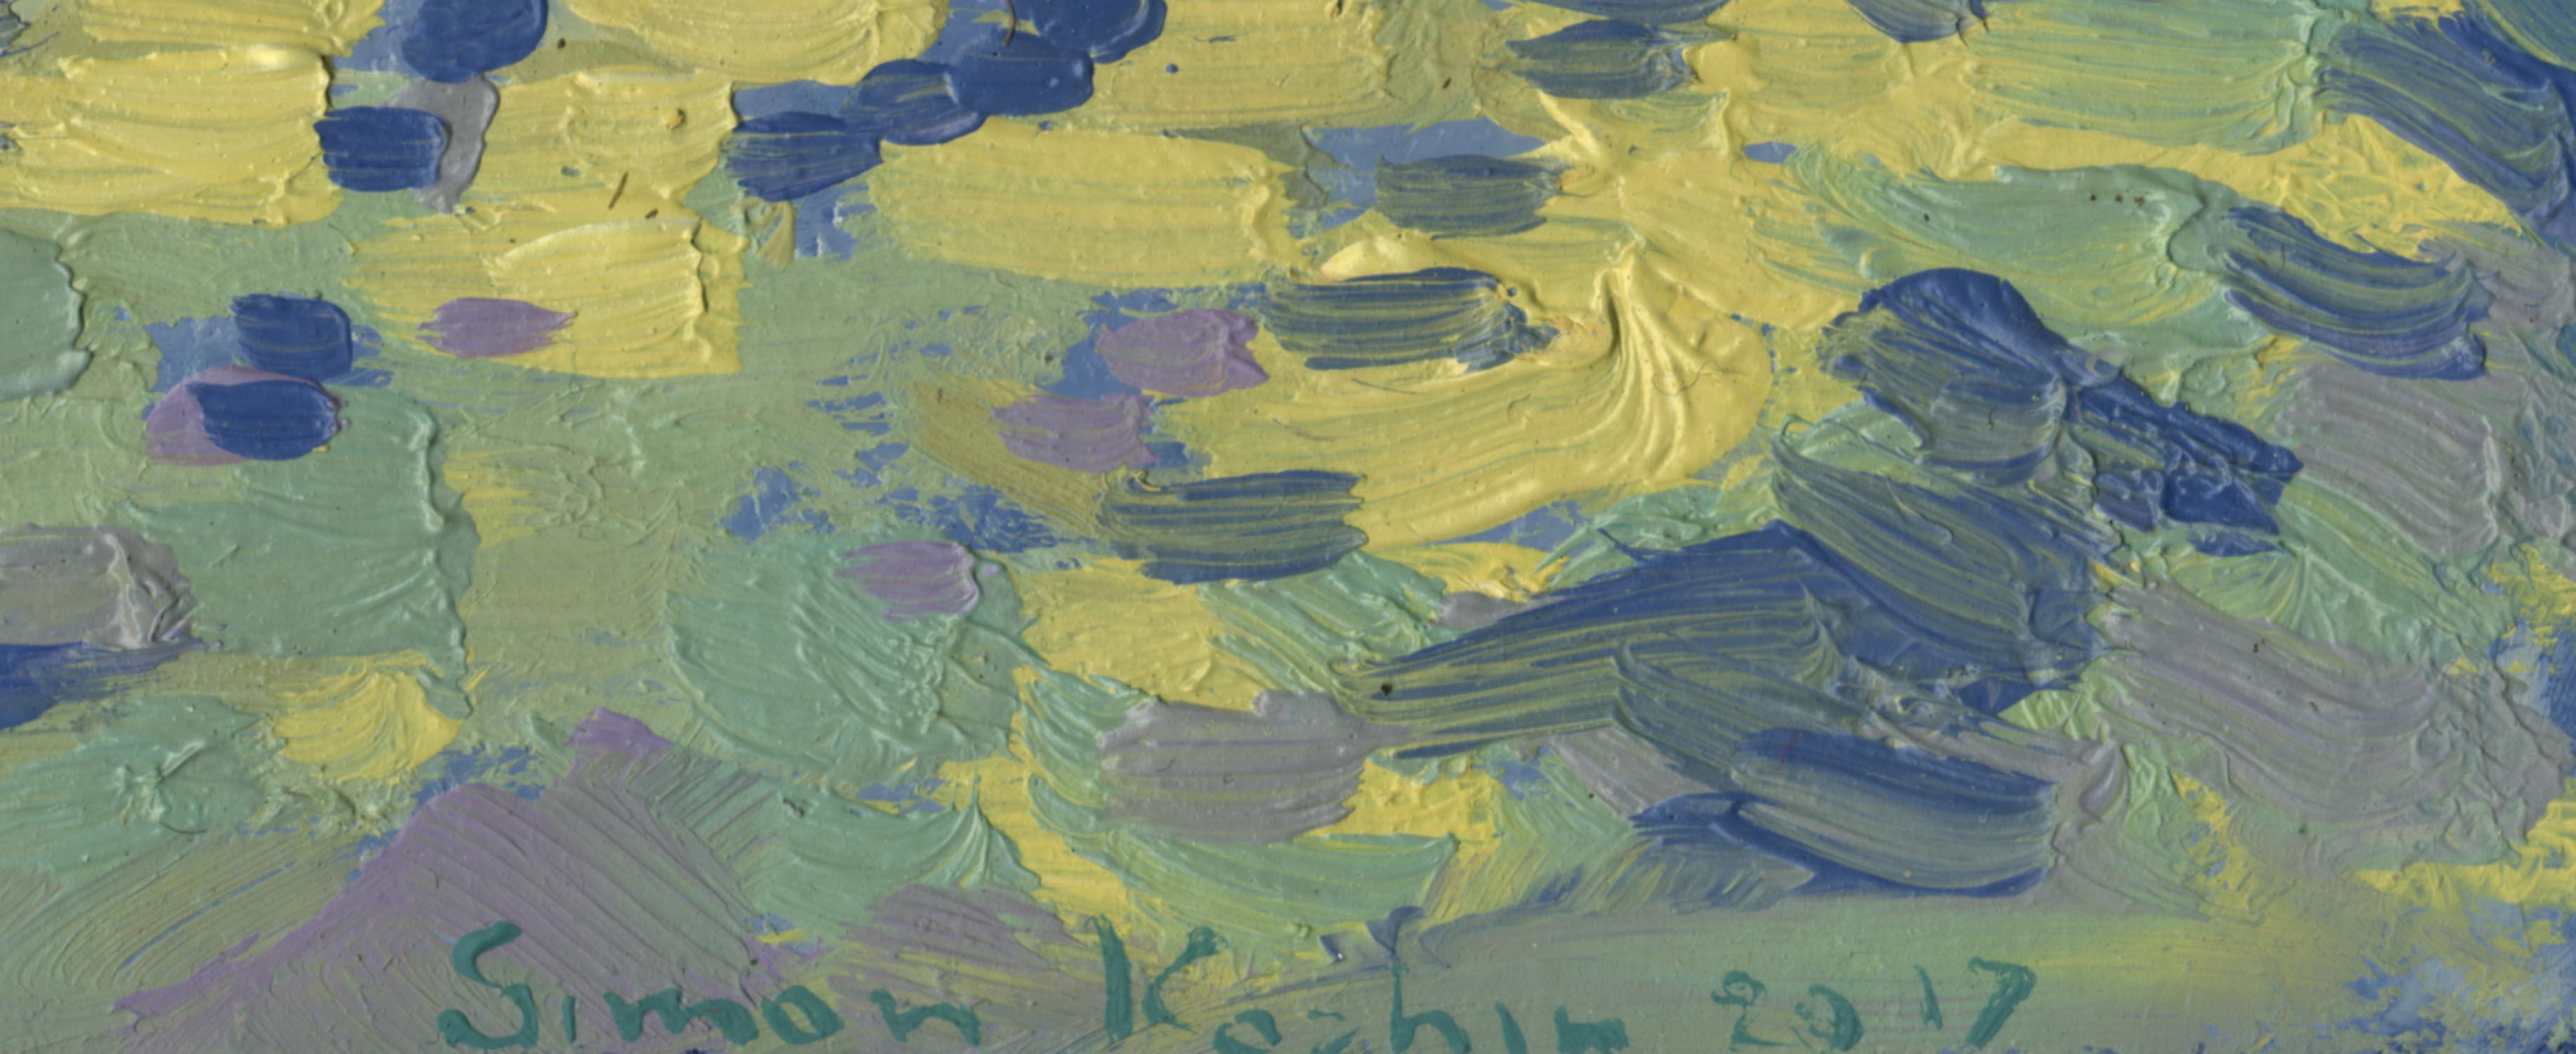 Rocky shores, Pleinair Impressionist Oil Painting by Simon Kozhin For Sale 4